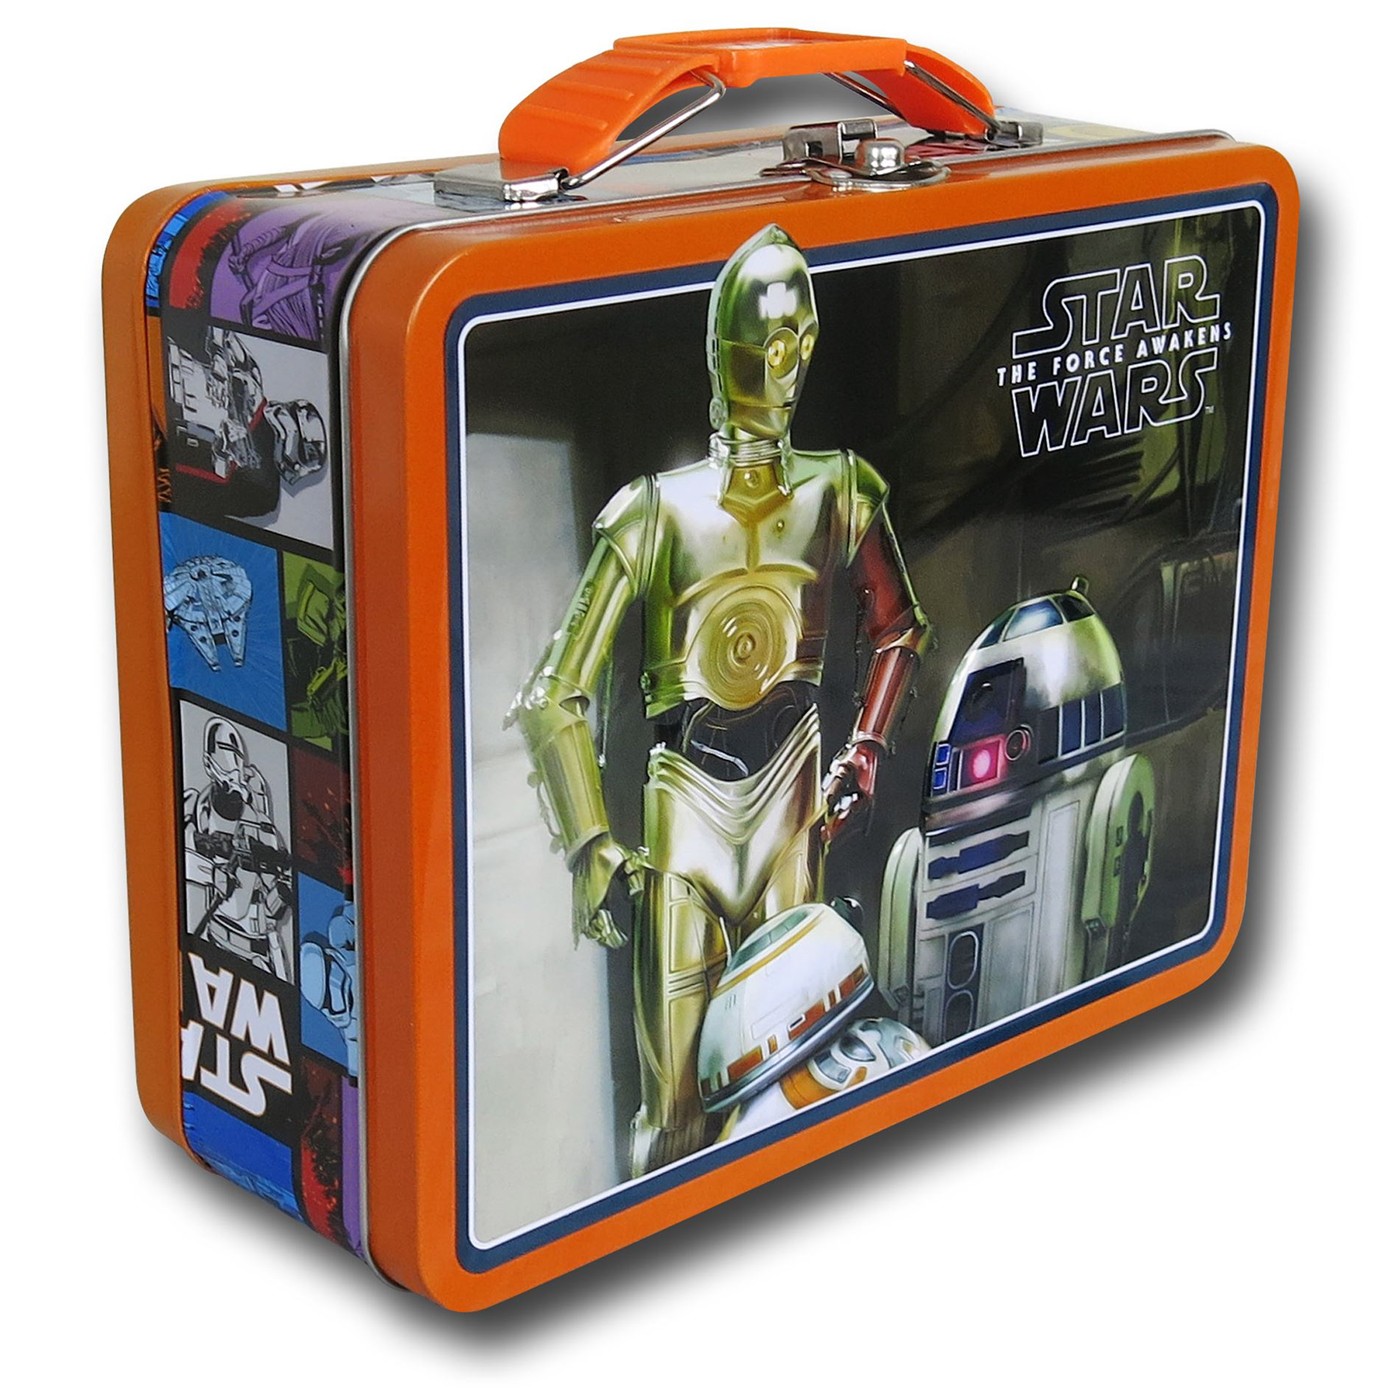 Star Wars Force Awakens R2-D2 & C3PO Lunchbox